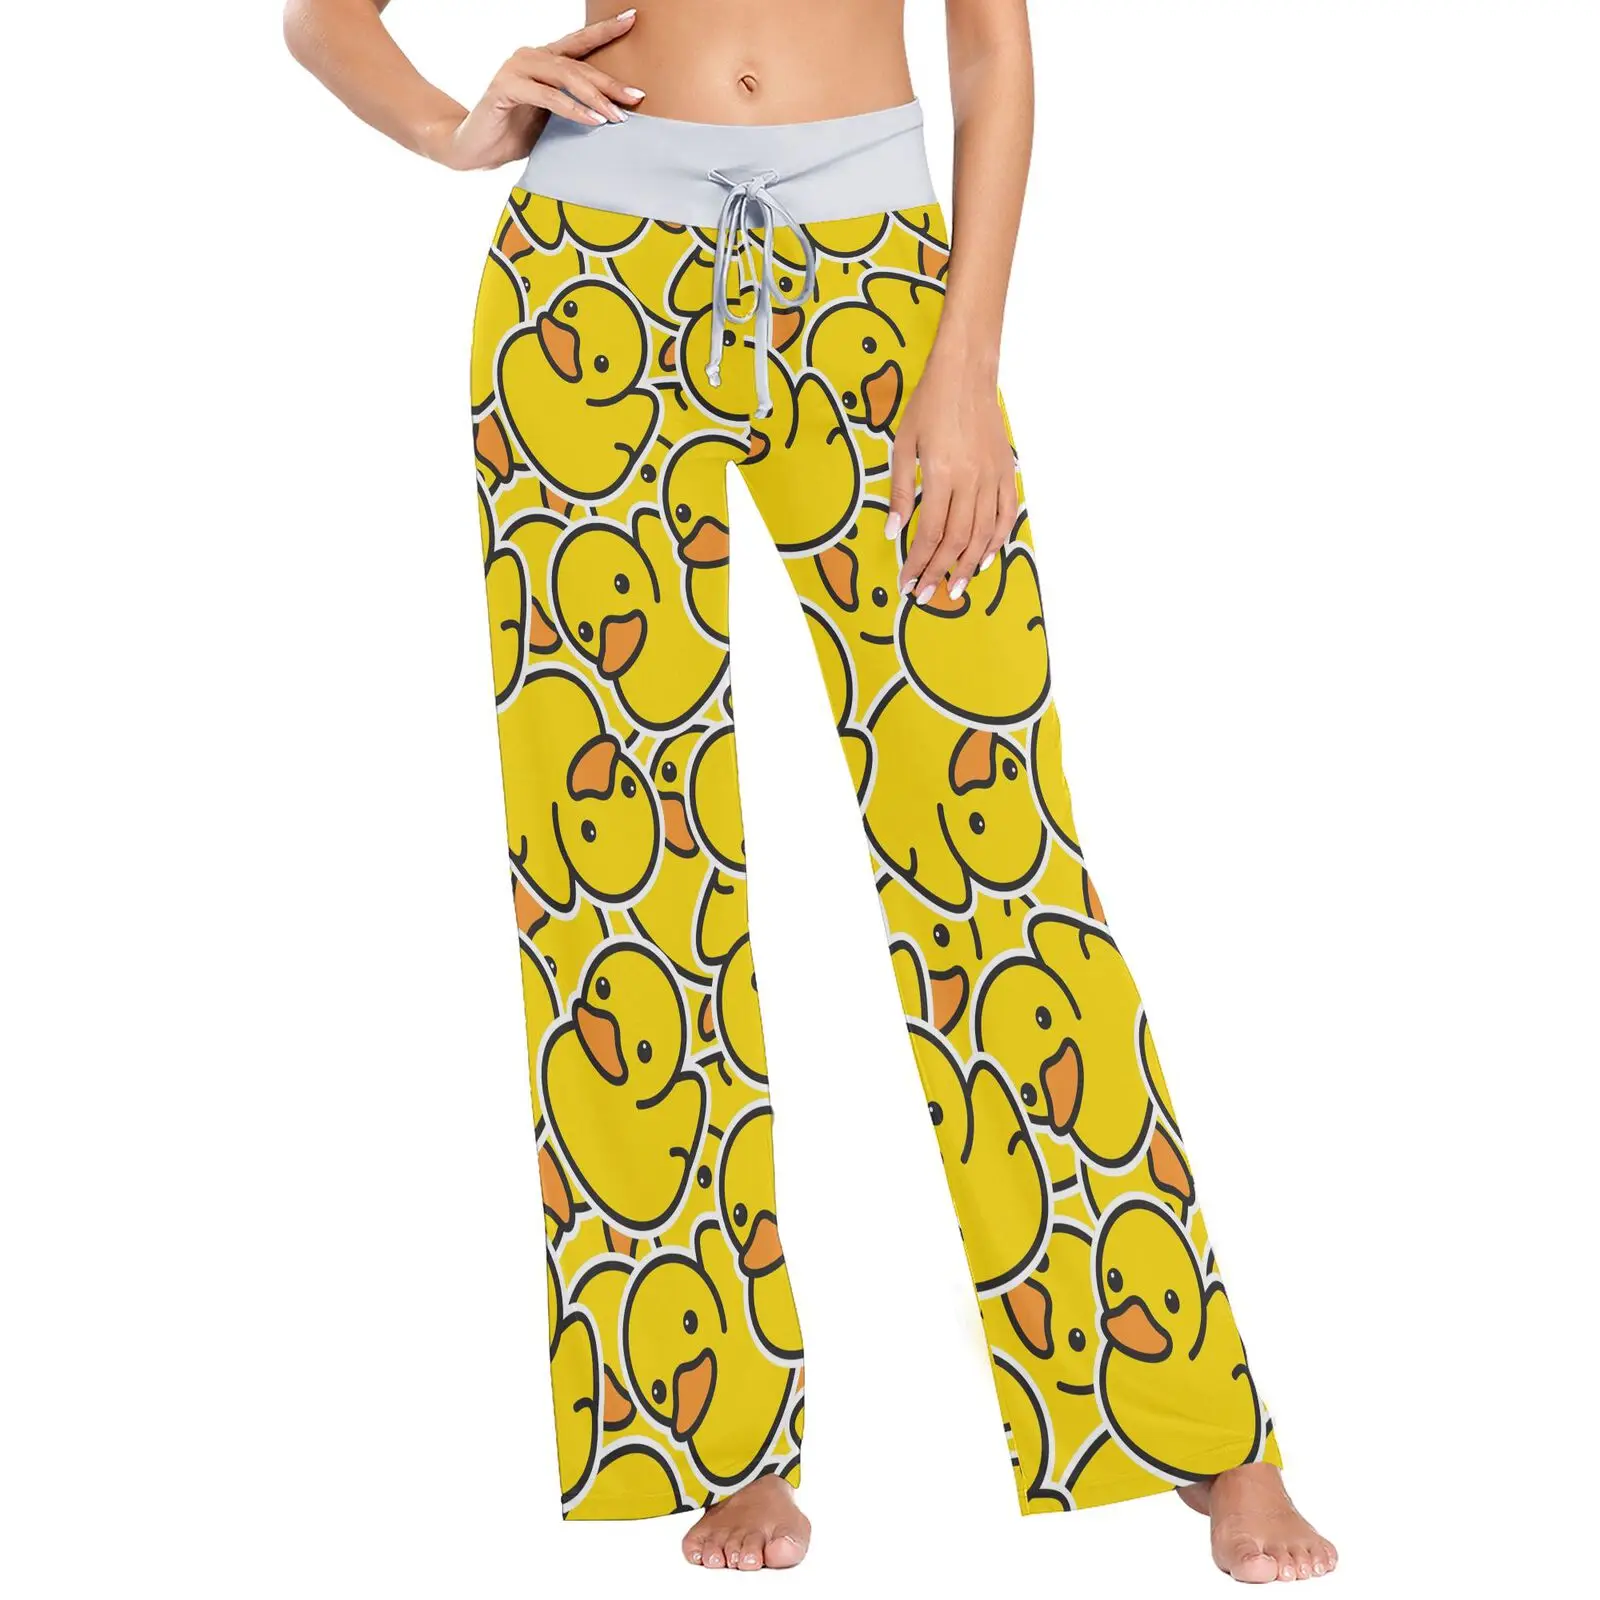 Autumn and Winter Sleep Bottom Women Cotton Long Pant Home Pajamas Soft Slip Yellow Little Duck Pants Big Size Casual Sleepwear